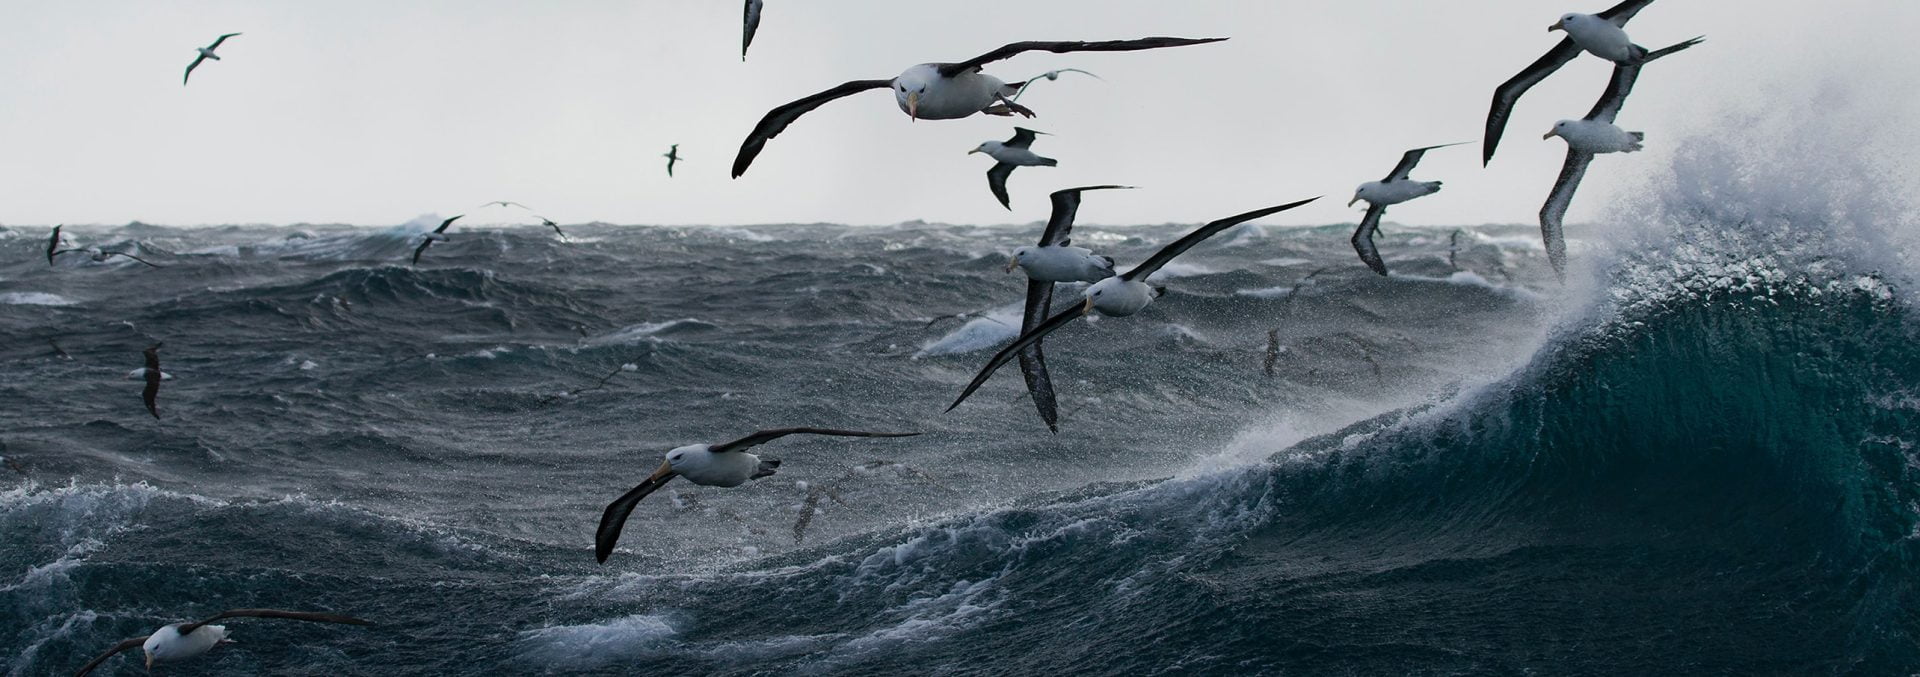 seagulls flying over ocean waves